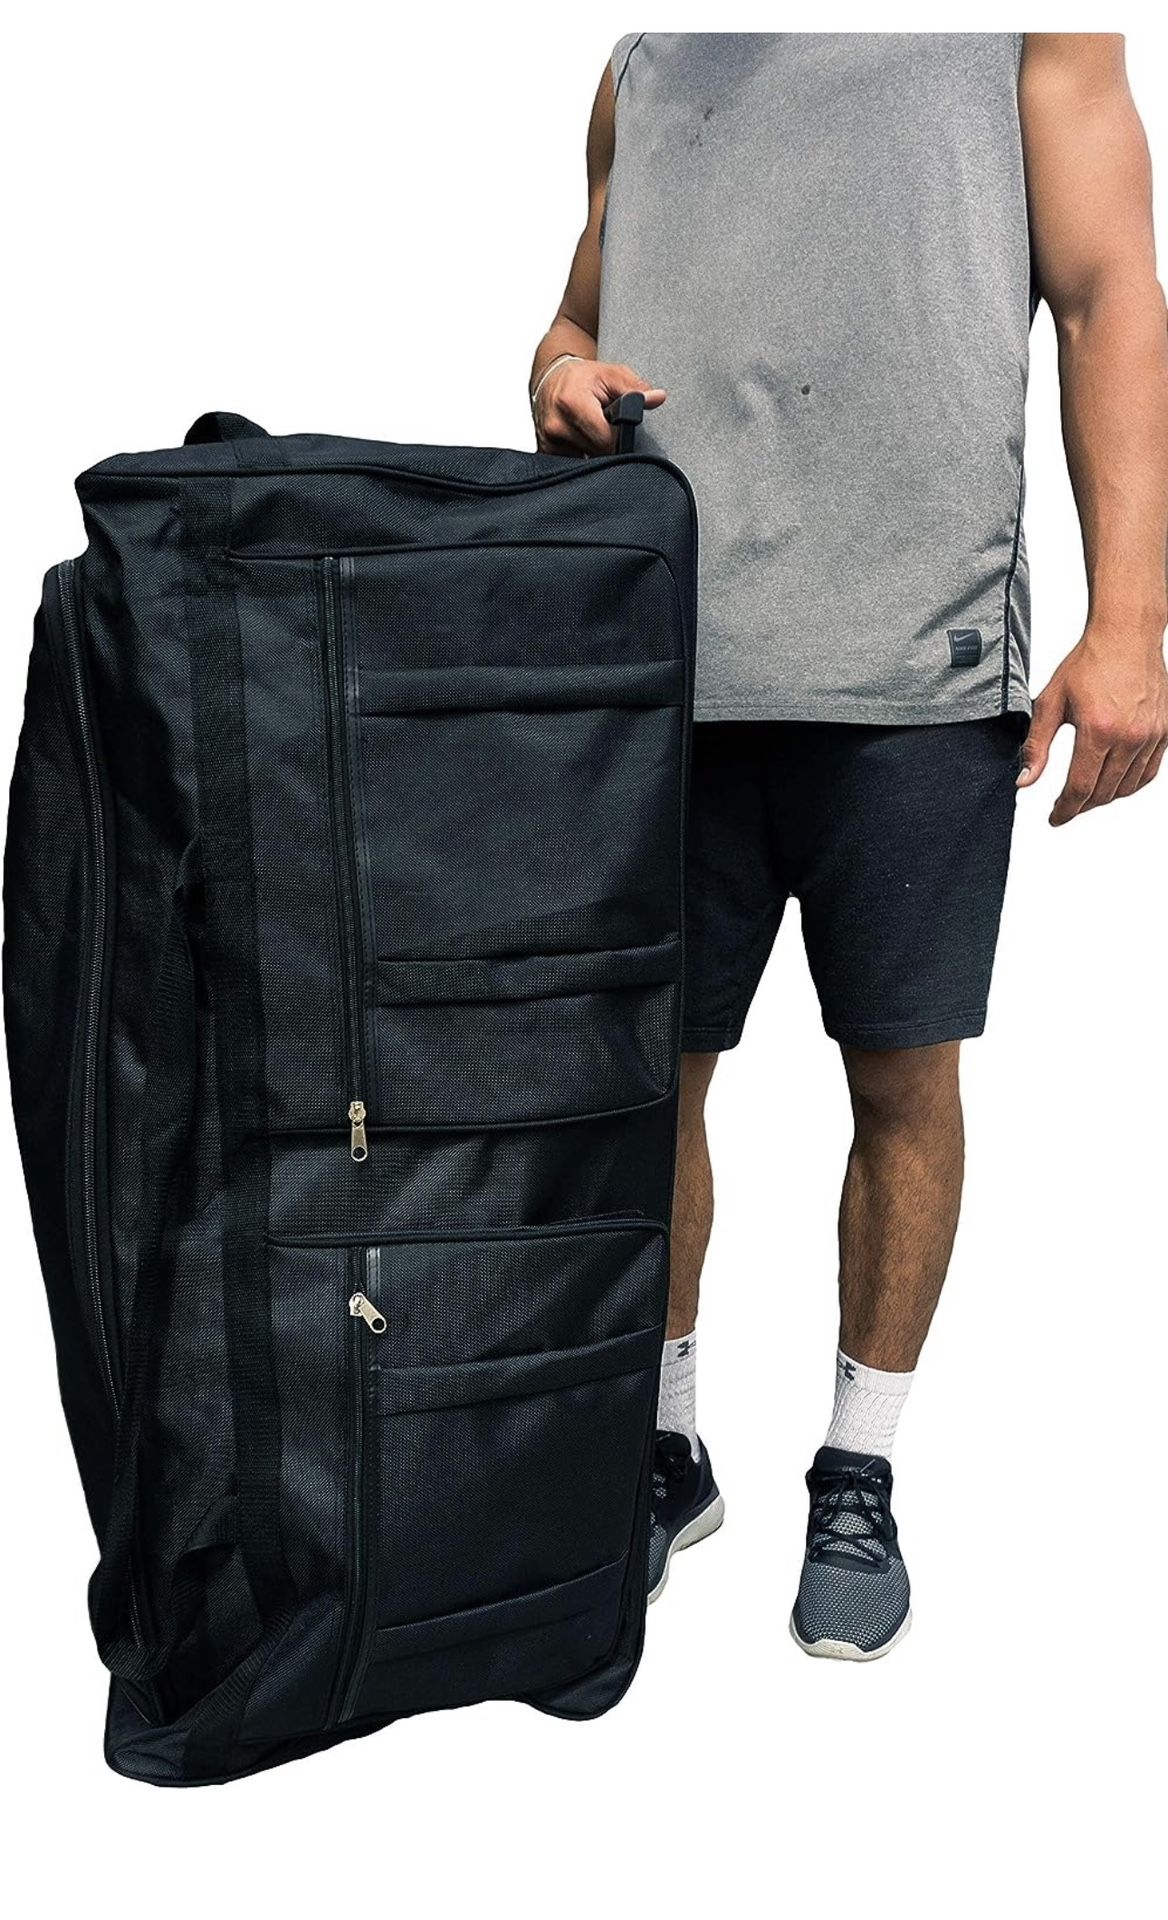 Gothamite 46-inch Rolling Duffle Bag with Wheels, Luggage Bag, Hockey Bag, XL Duffle Bag With Rollers, Heavy Duty Oversized Storage Bag